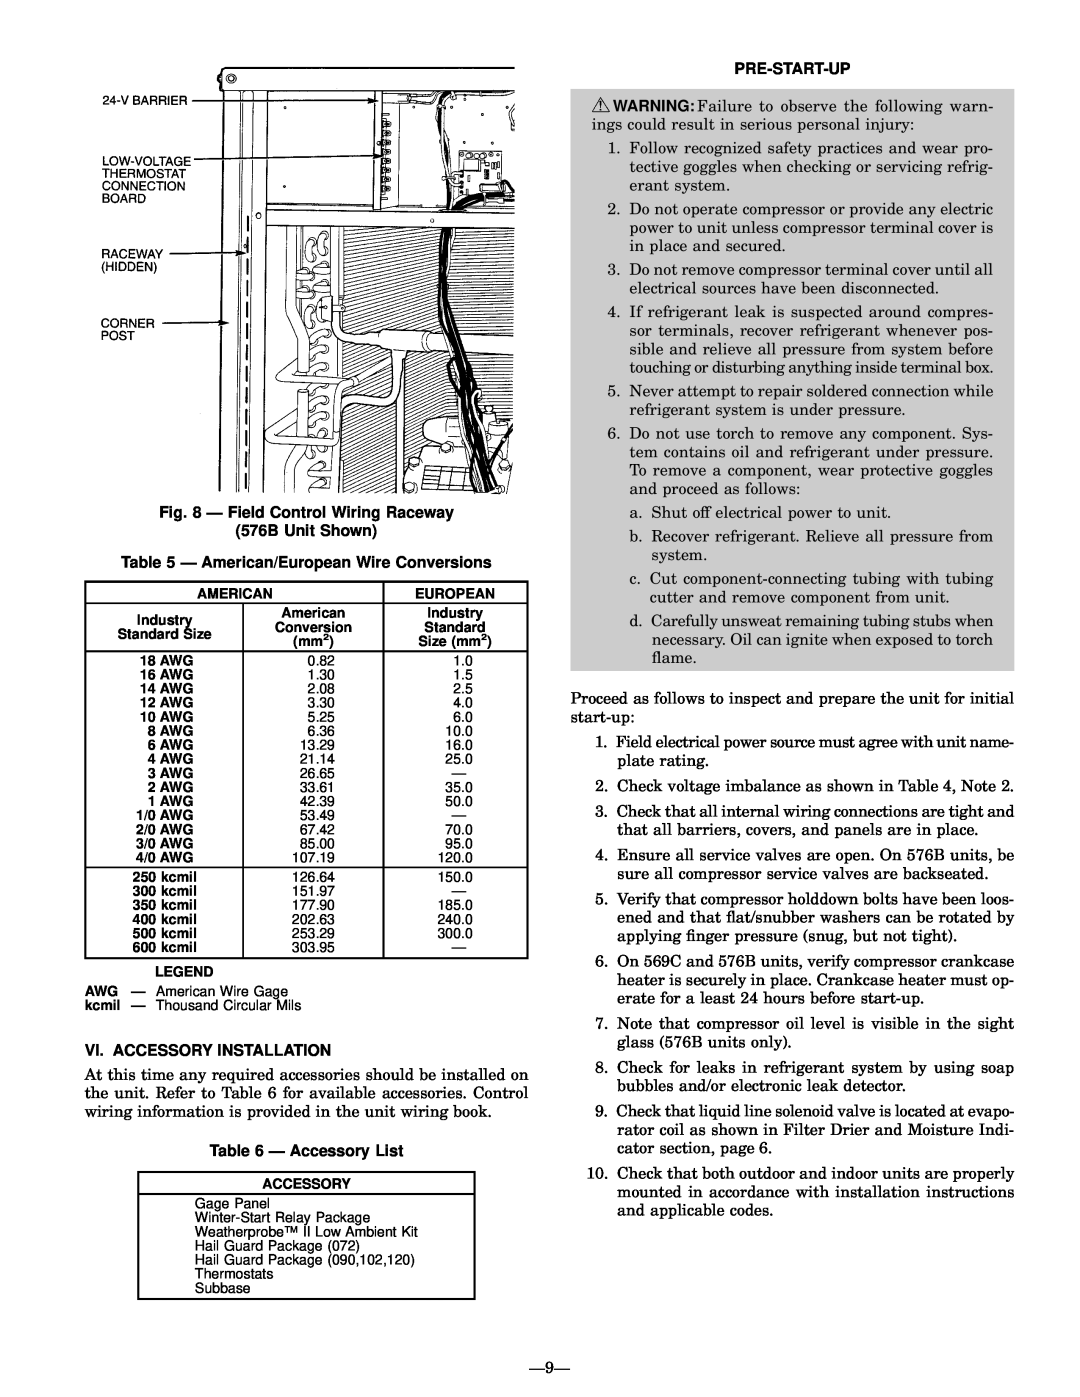 Bryant 569C Ð Field Control Wiring Raceway, 576B Unit Shown, Ð American/European Wire Conversions, Ð Accessory List 